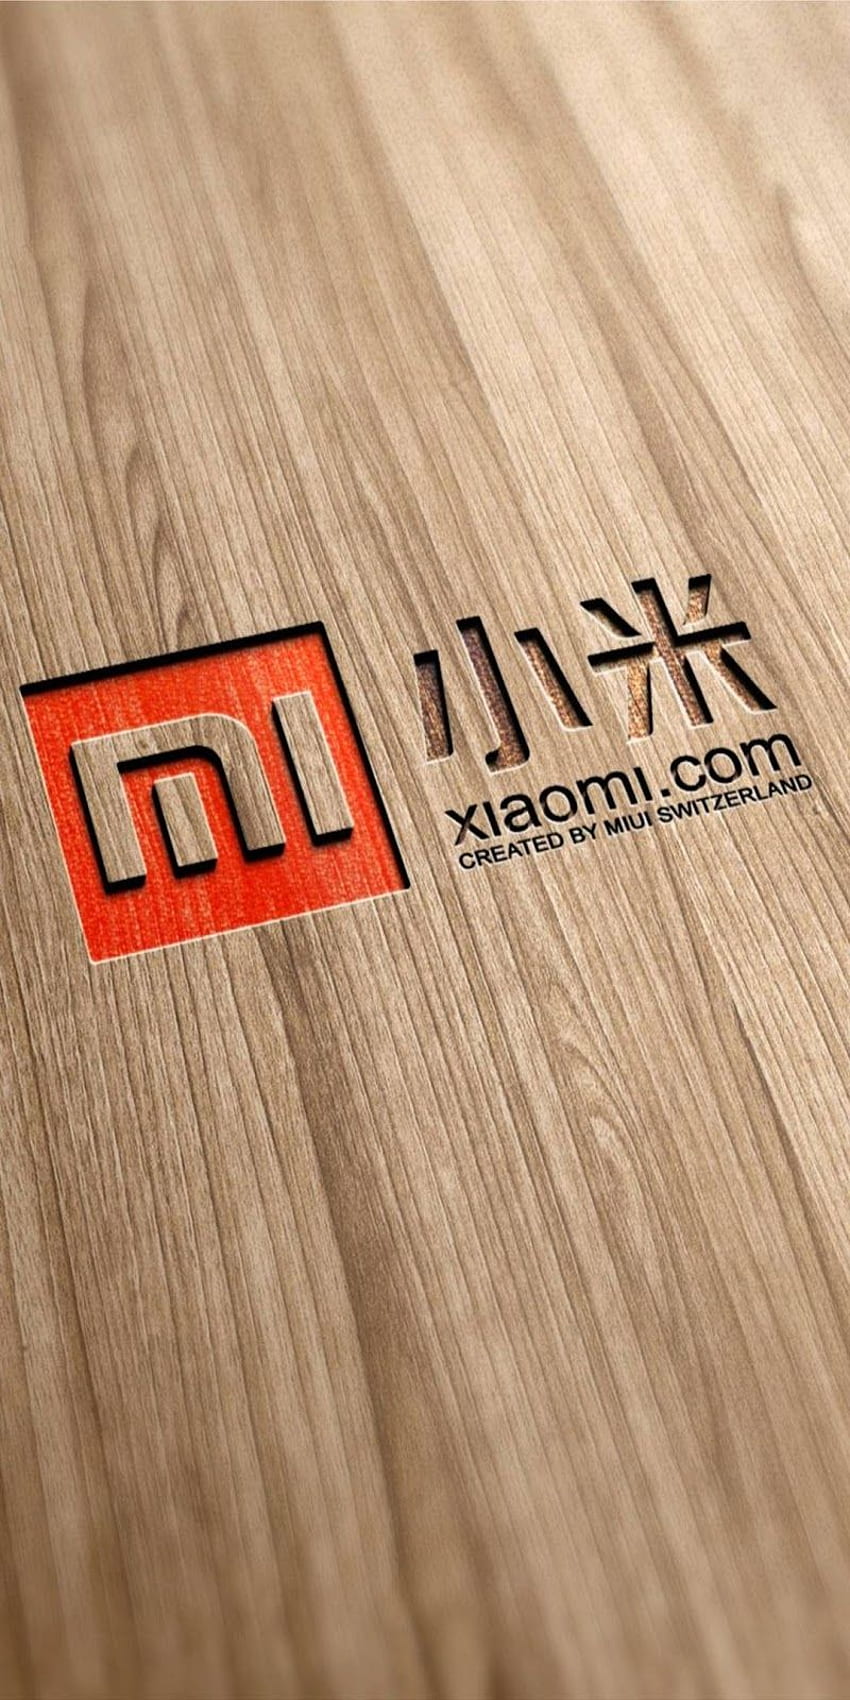 Xiaomi on X: 